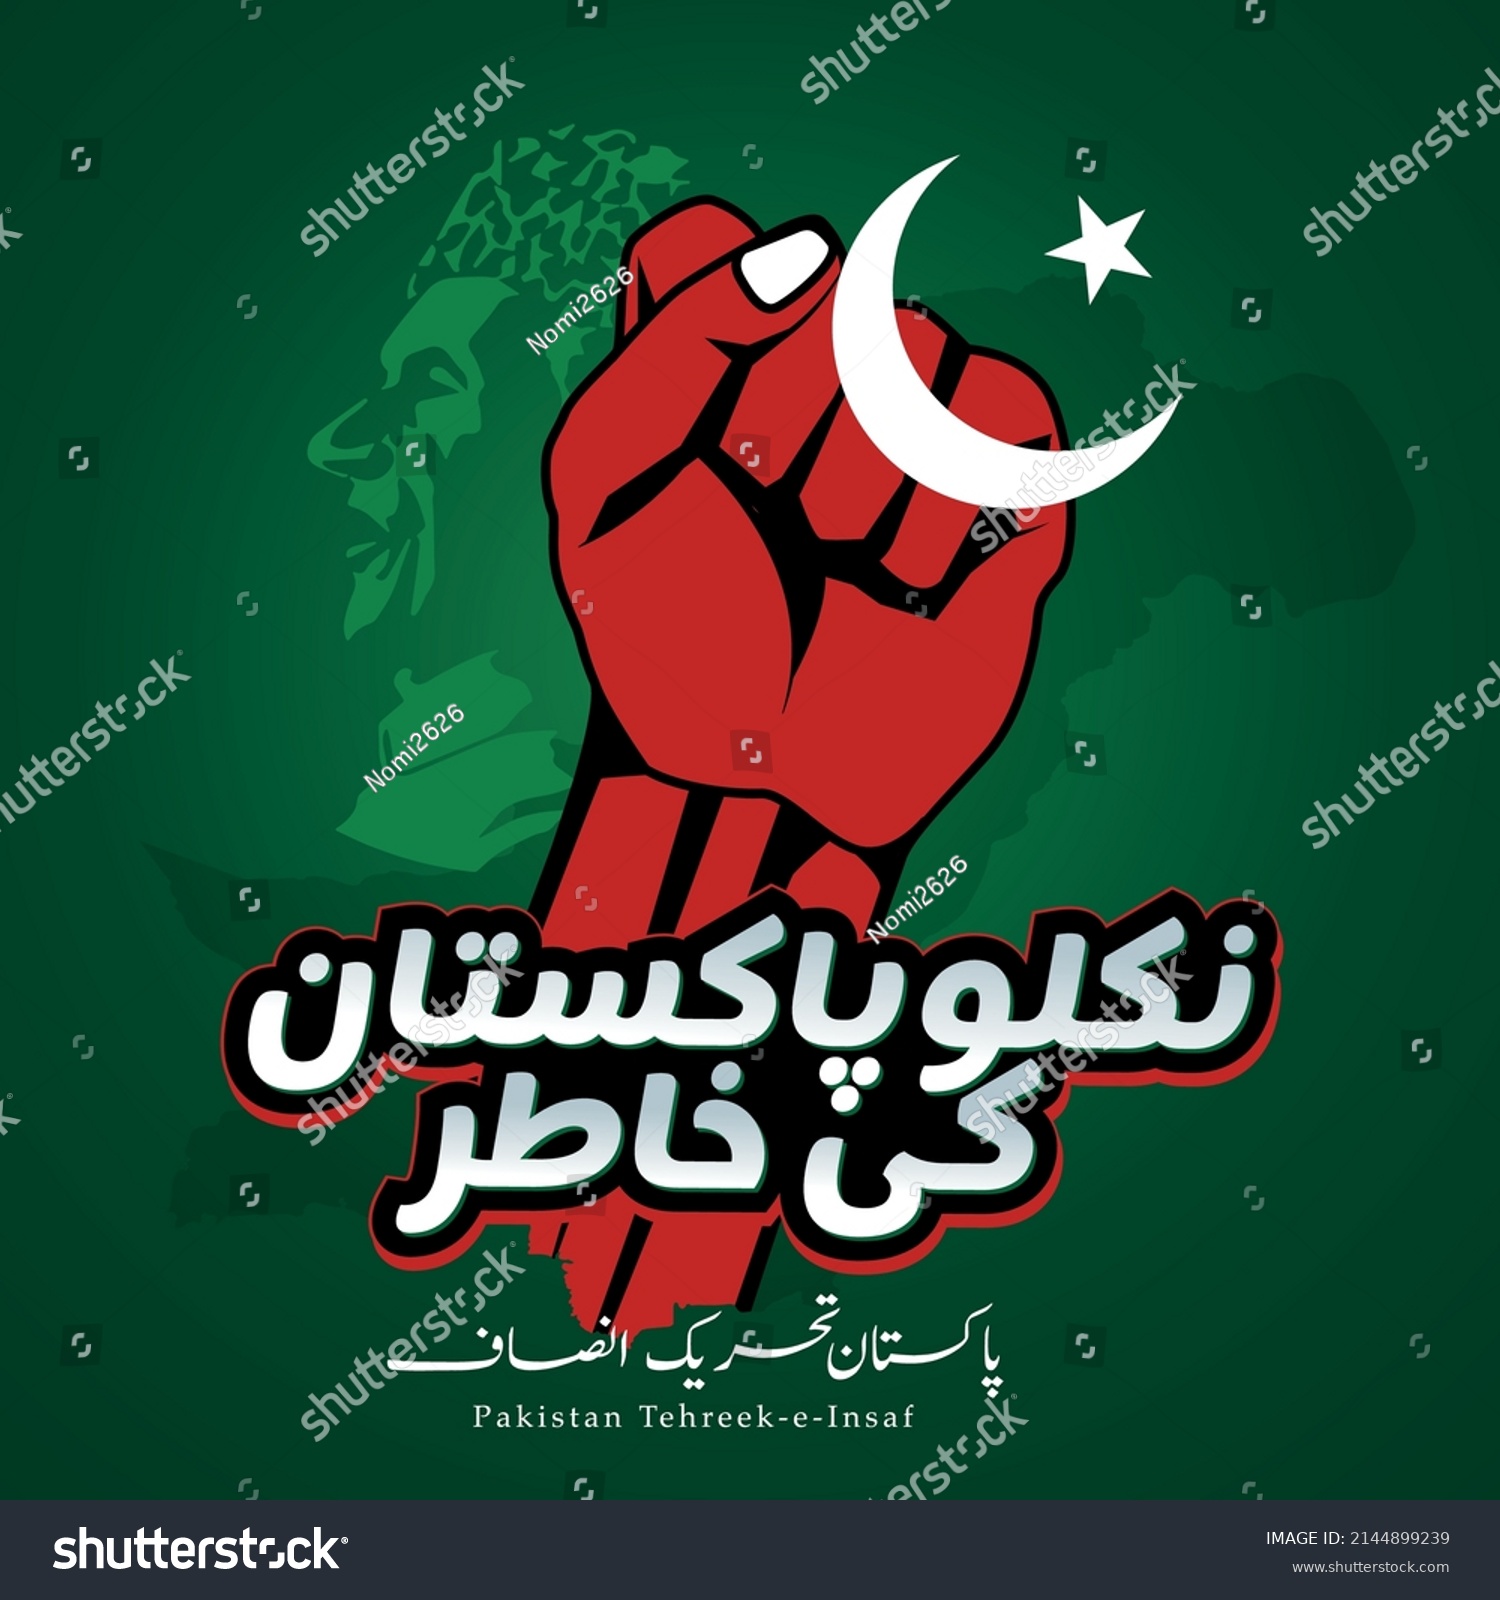 SVG of Translate: Niklo Pakistan ki Khatir
urdu calligraphic. red power punch. vector illustration svg